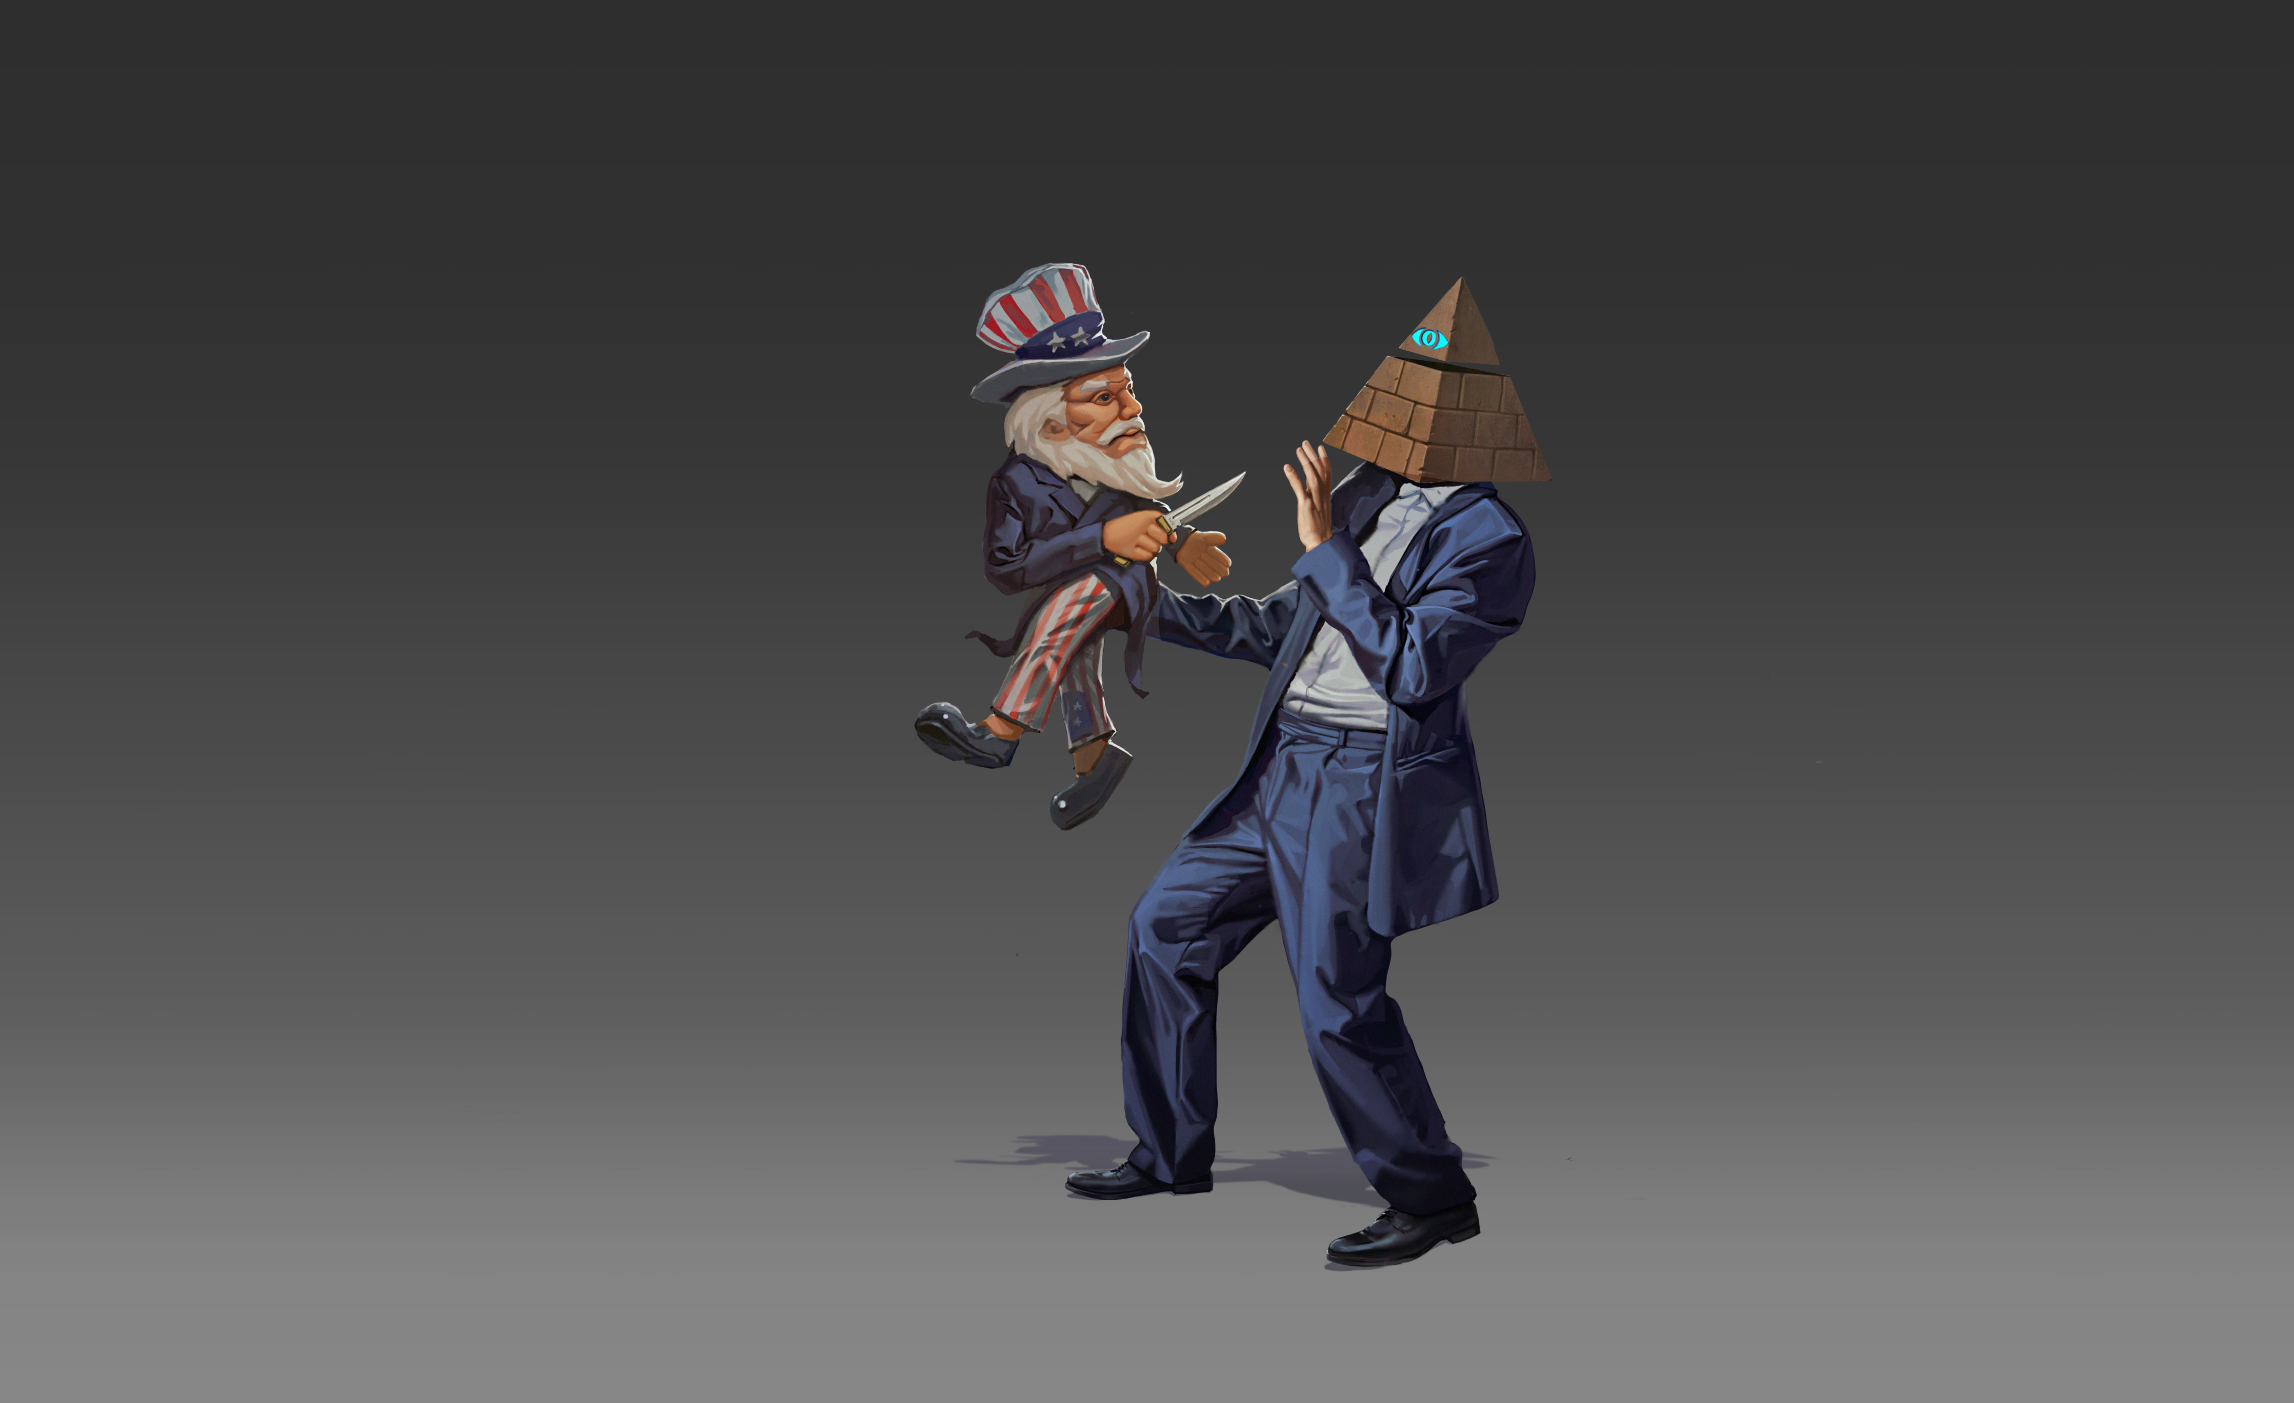 General 2294x1403 Illuminati The Great Awakening Uncle Sam  knife Pyramid Head politics propaganda digital art simple background